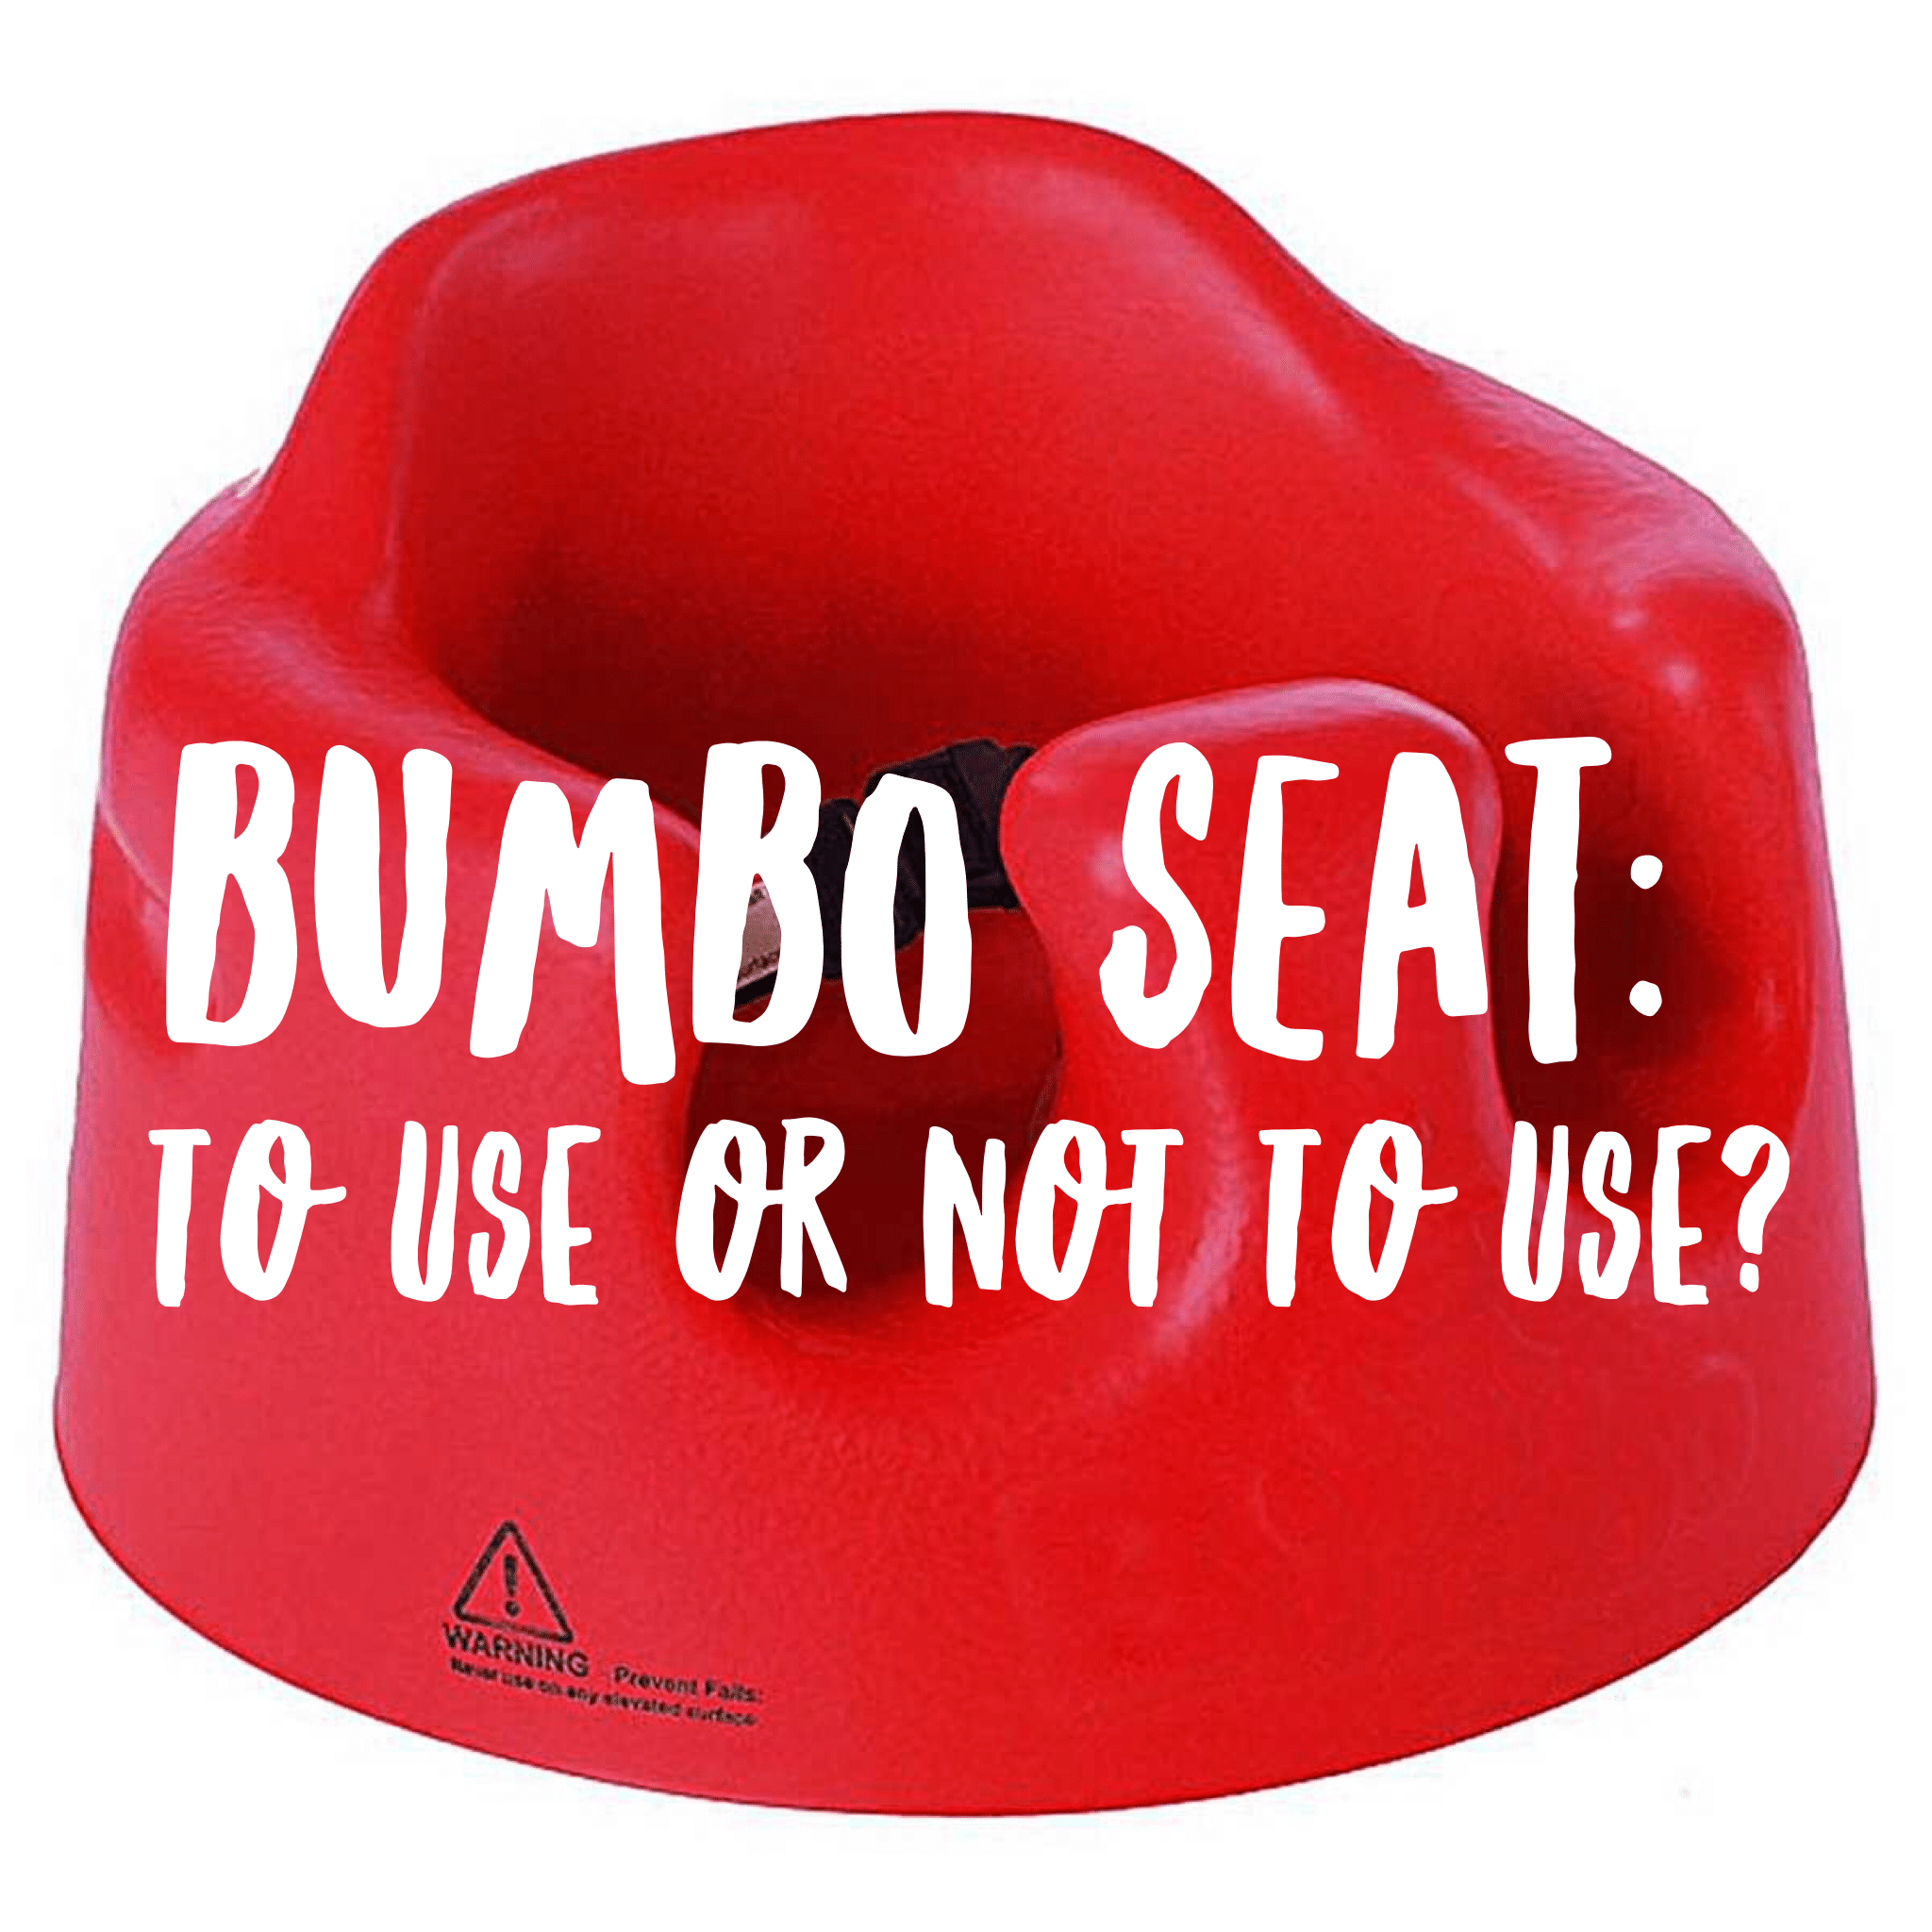 bumbo seat price